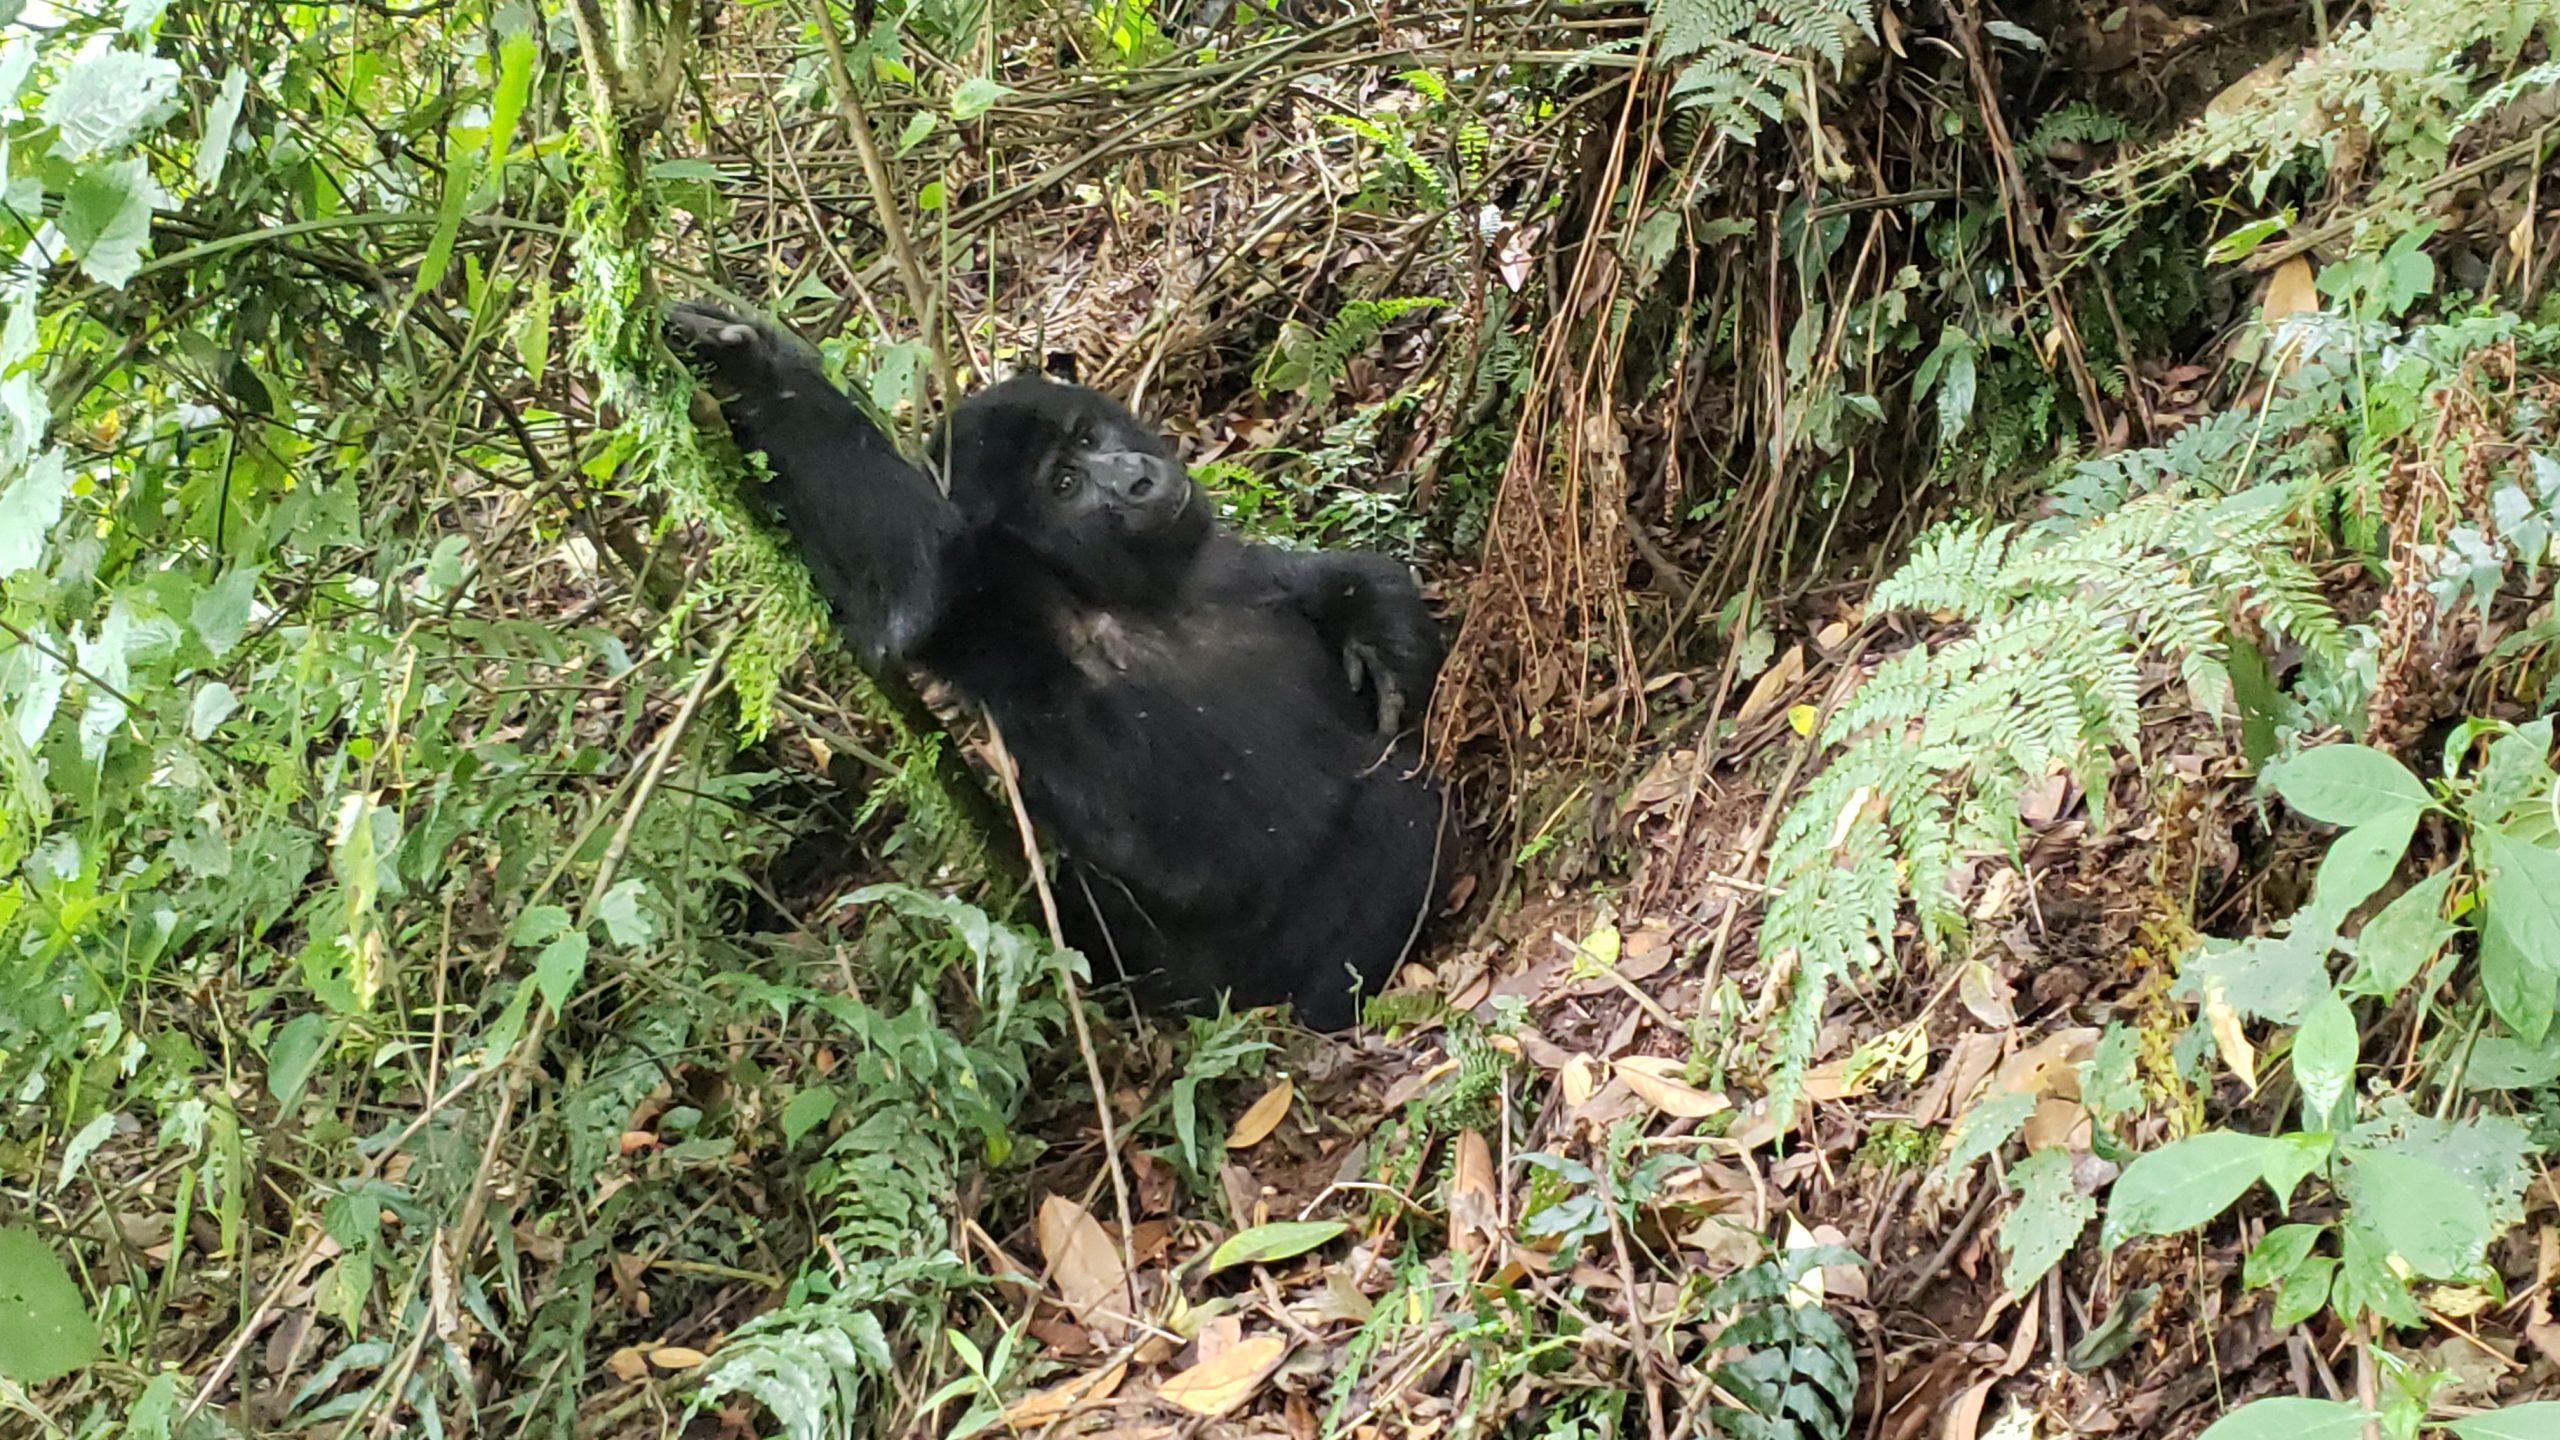 Best Company for Gorilla Trekking in Uganda, Rwanda and Africa